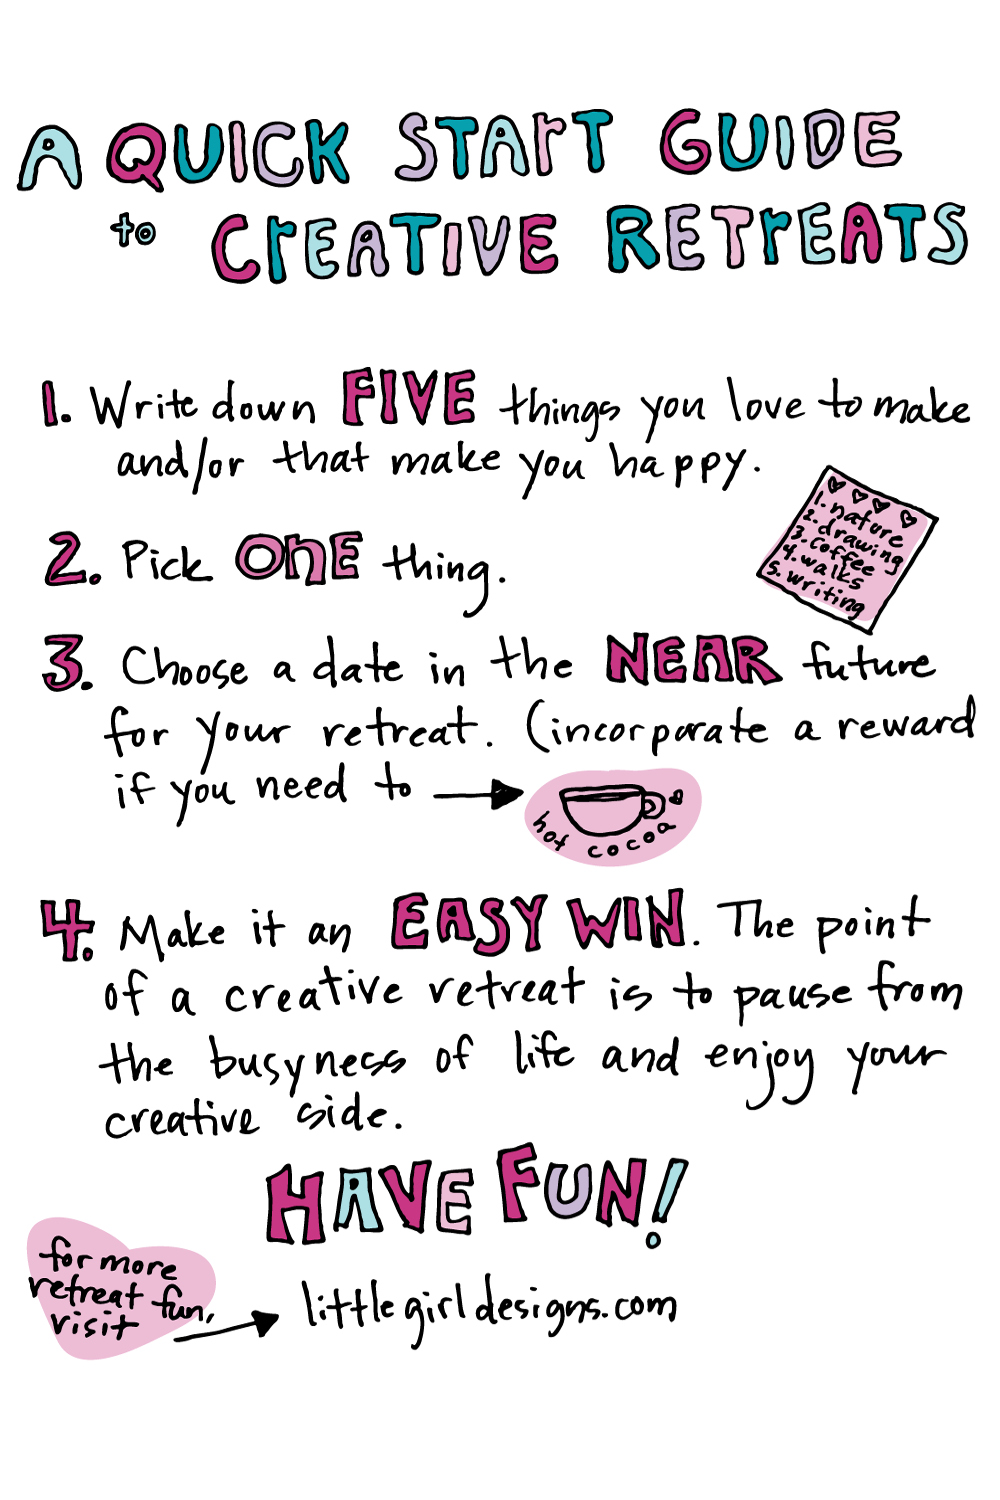 A Quick Start Guide to Creative Retreats